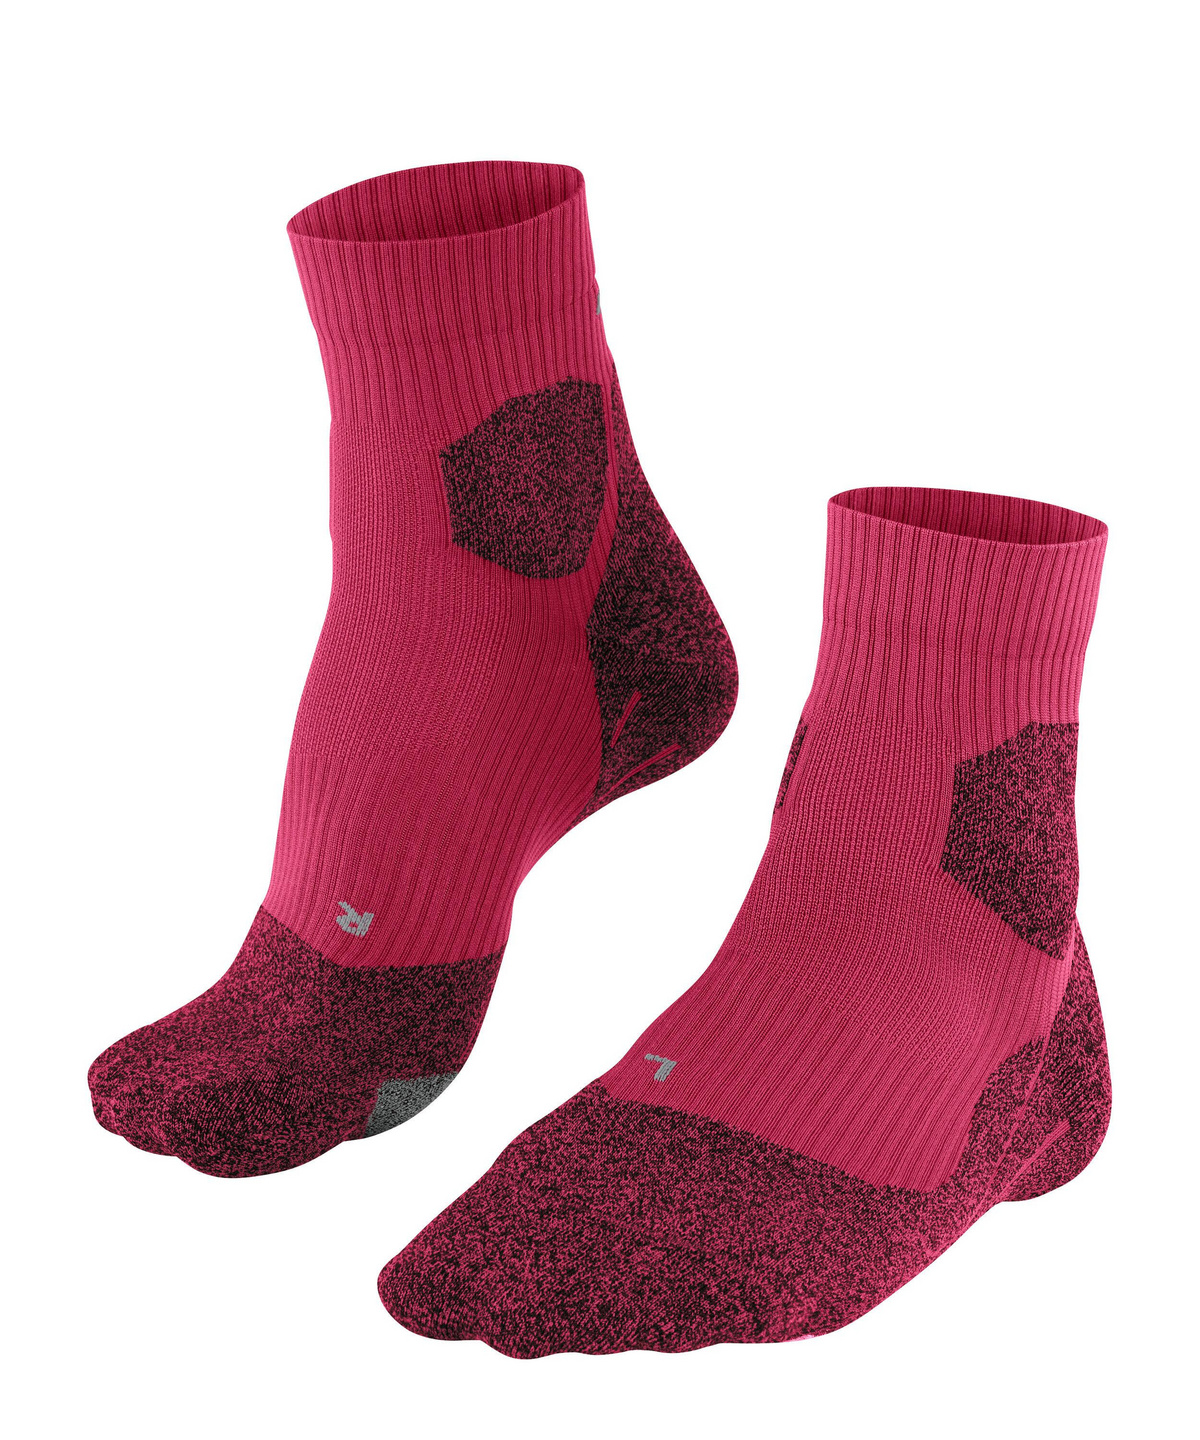 Buy Falke RU Trail Grip Running Socks Women Black online